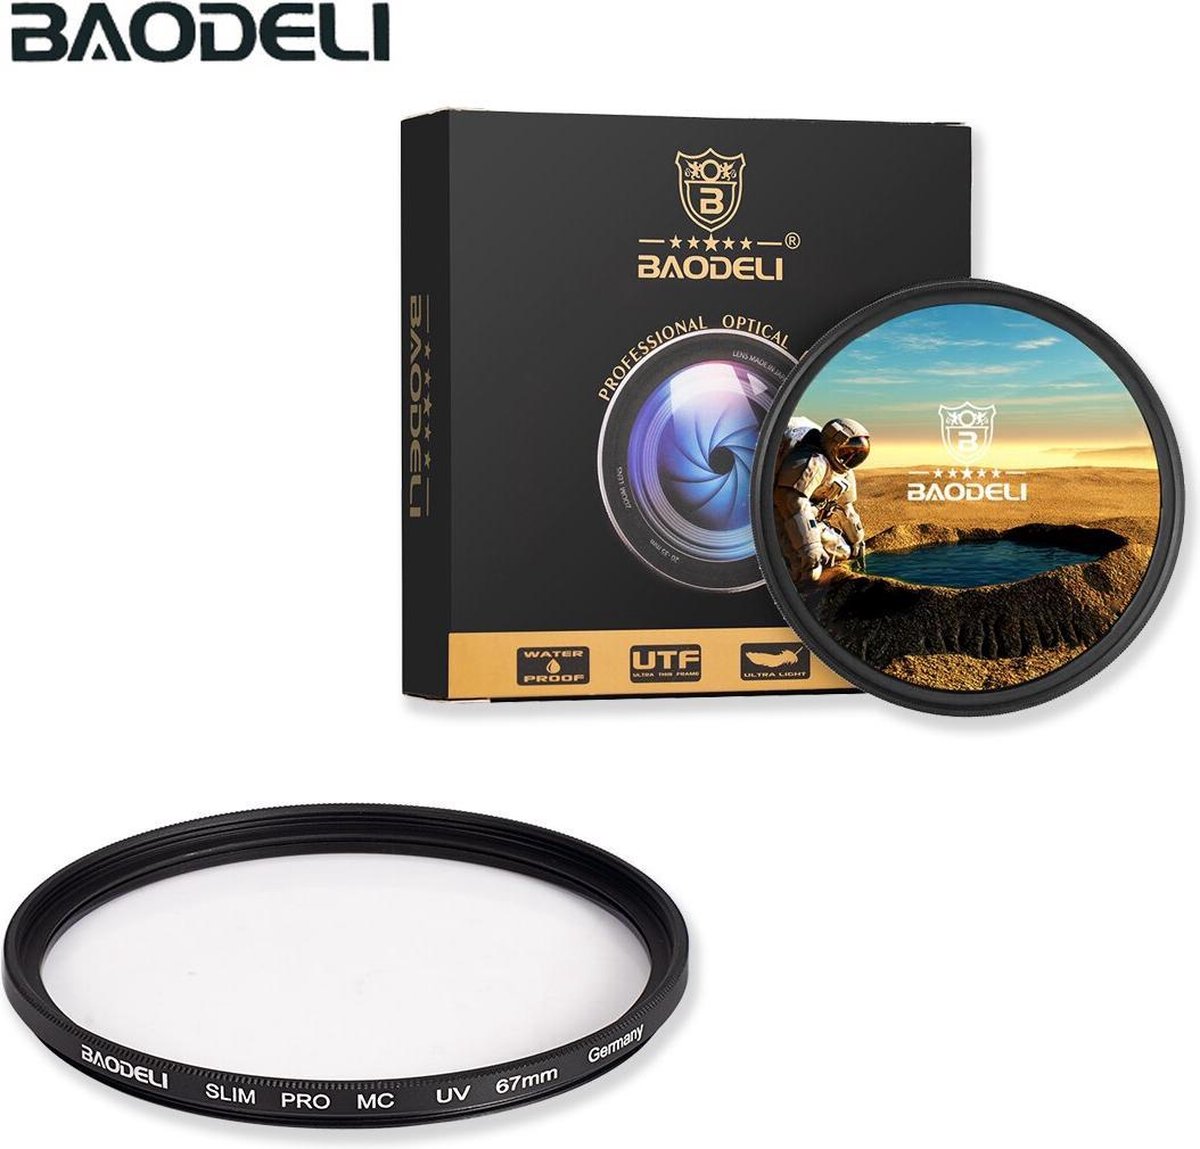 Baodeli 77mm UV filter MC slim Pro